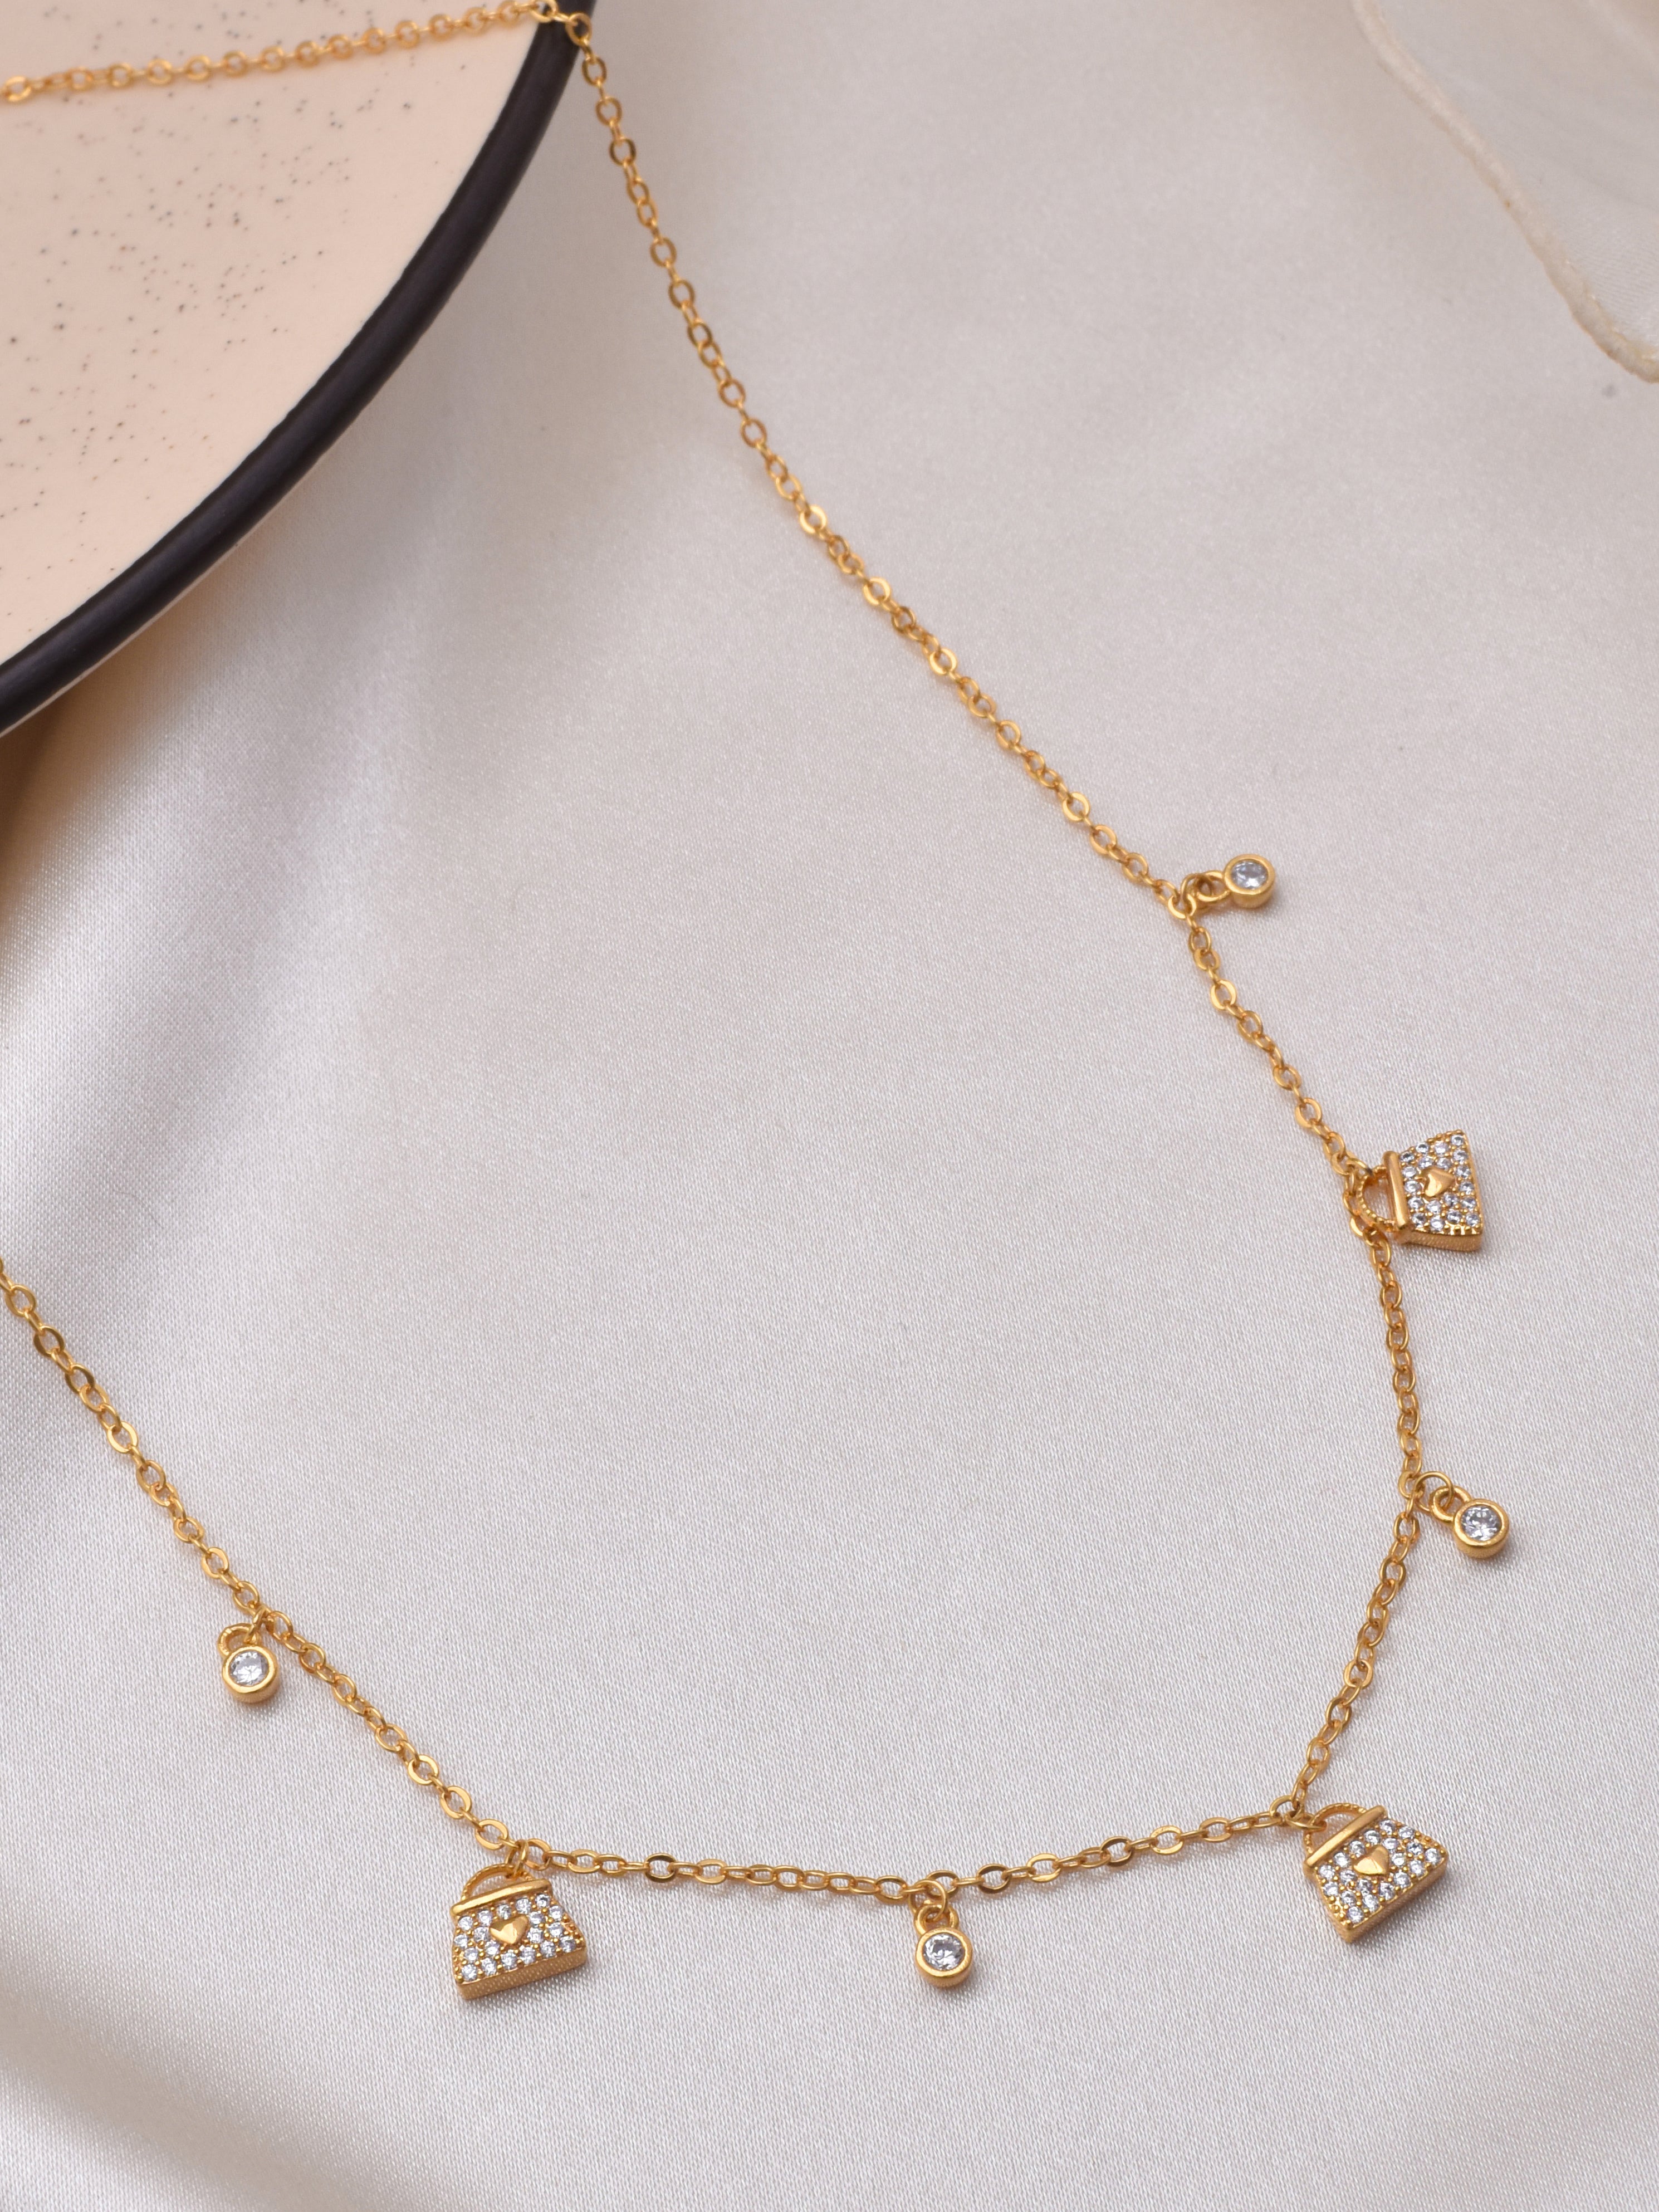 22 Karat Gold Charm Bracelet | Wrist jewelry, Gold necklace designs, Gold  bracelet simple